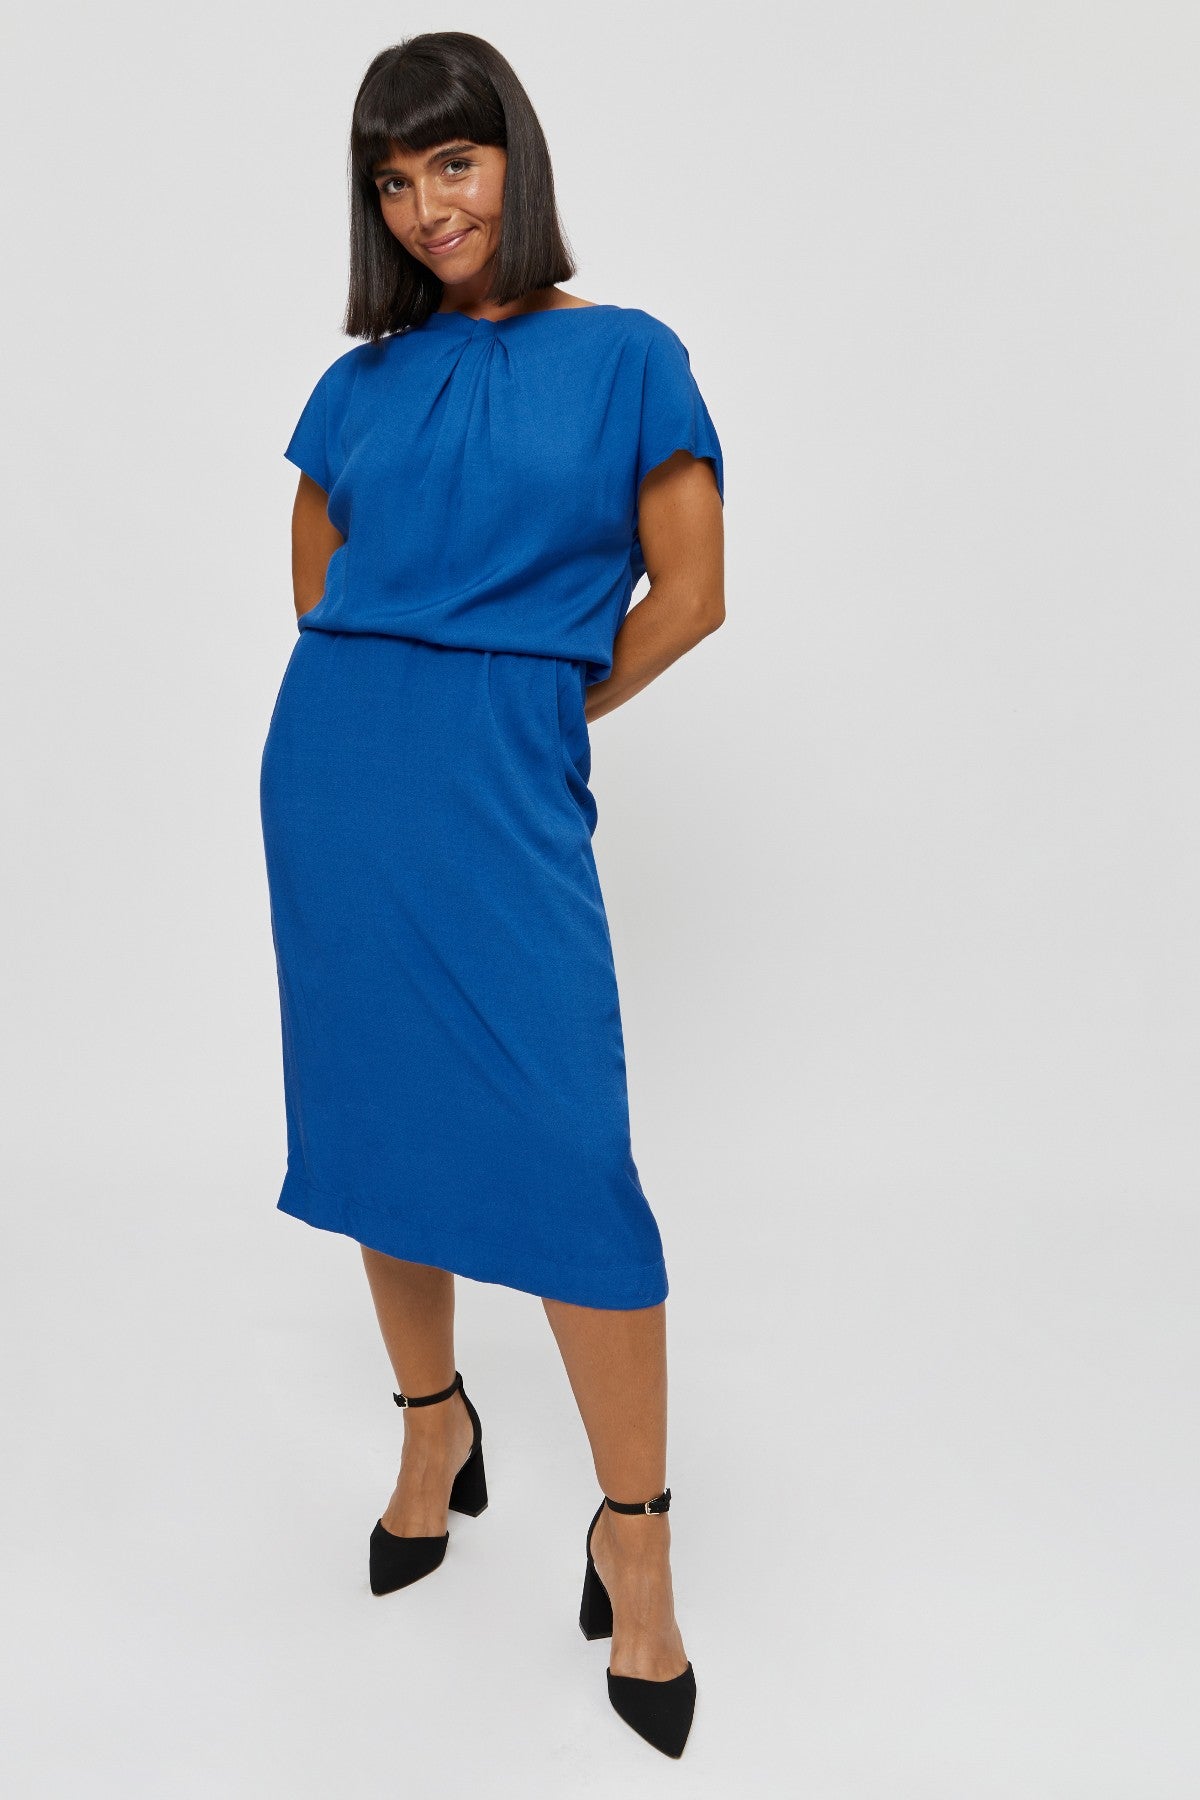 Work Dress AMY, Midi Formal Dress in Blue - AYANI